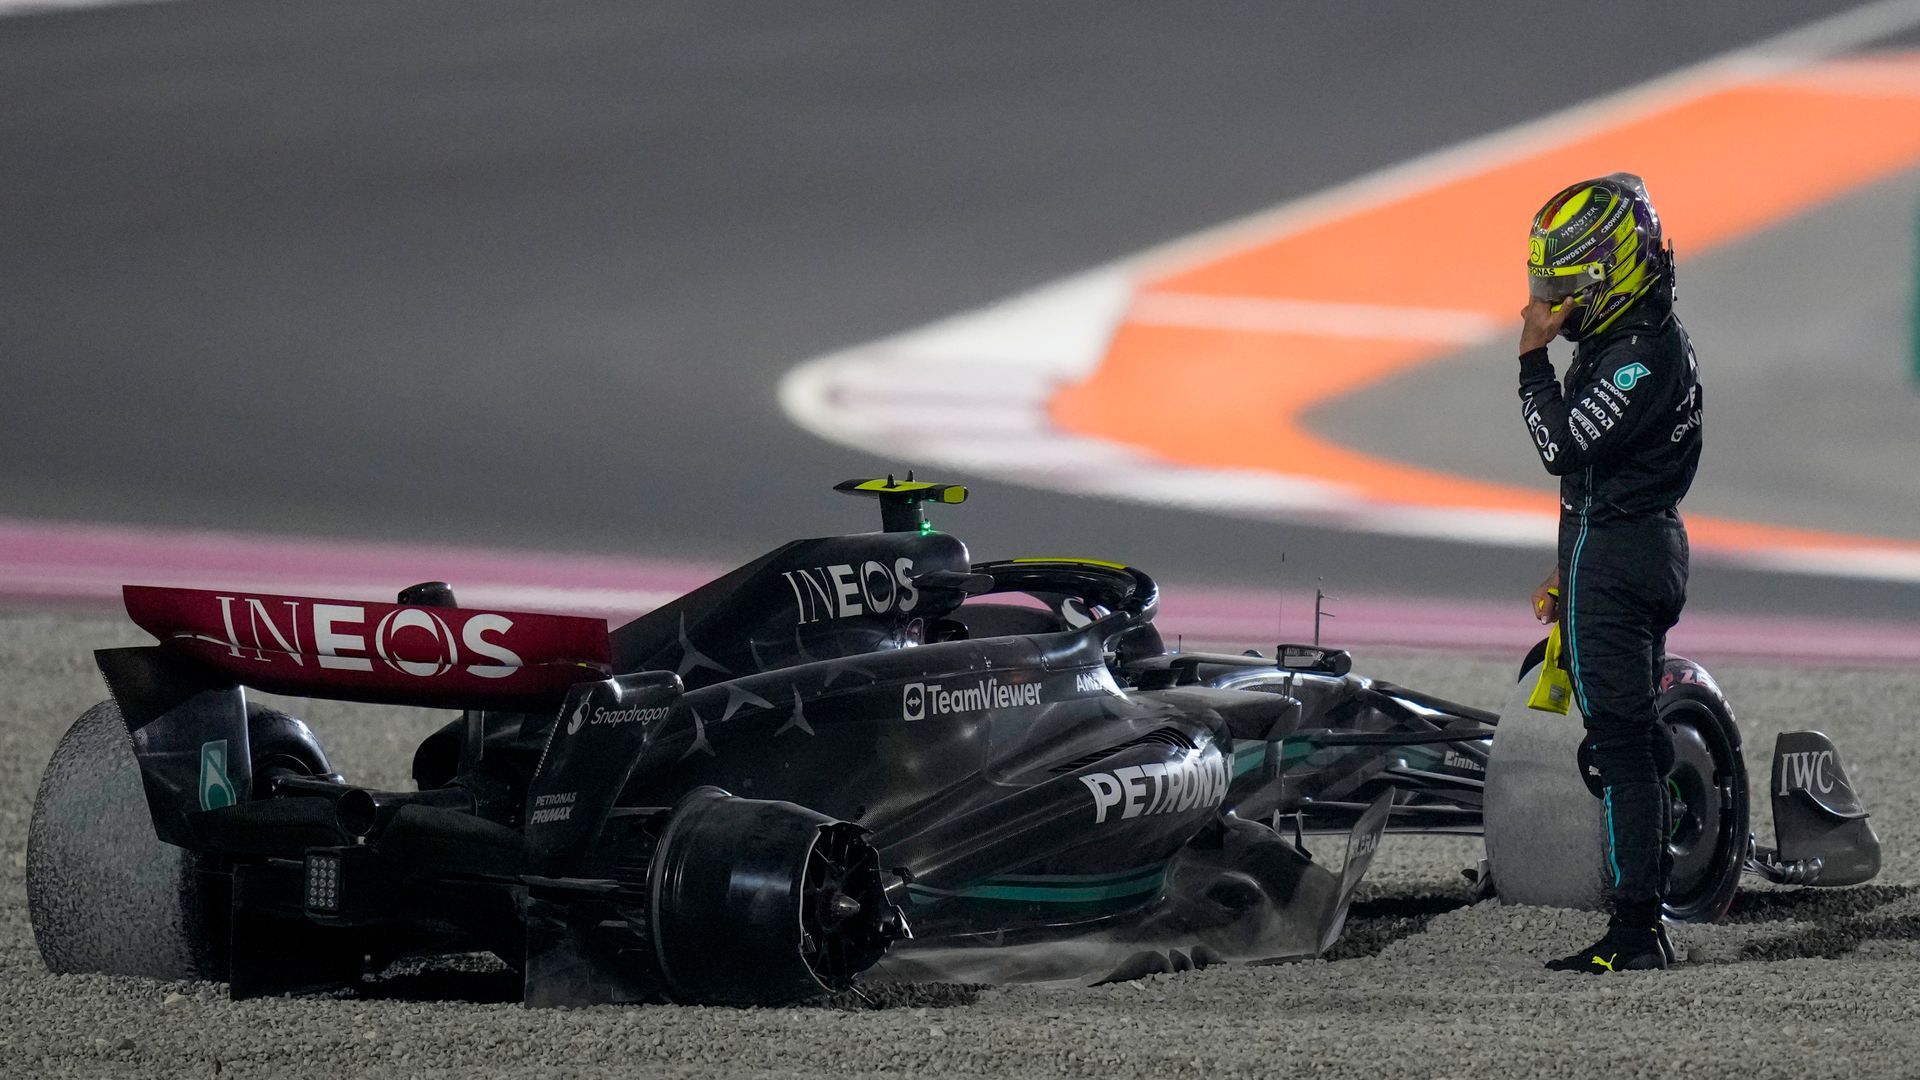 Qatar GP: Verstappen leads after Hamilton-Russell crash at start LIVE!